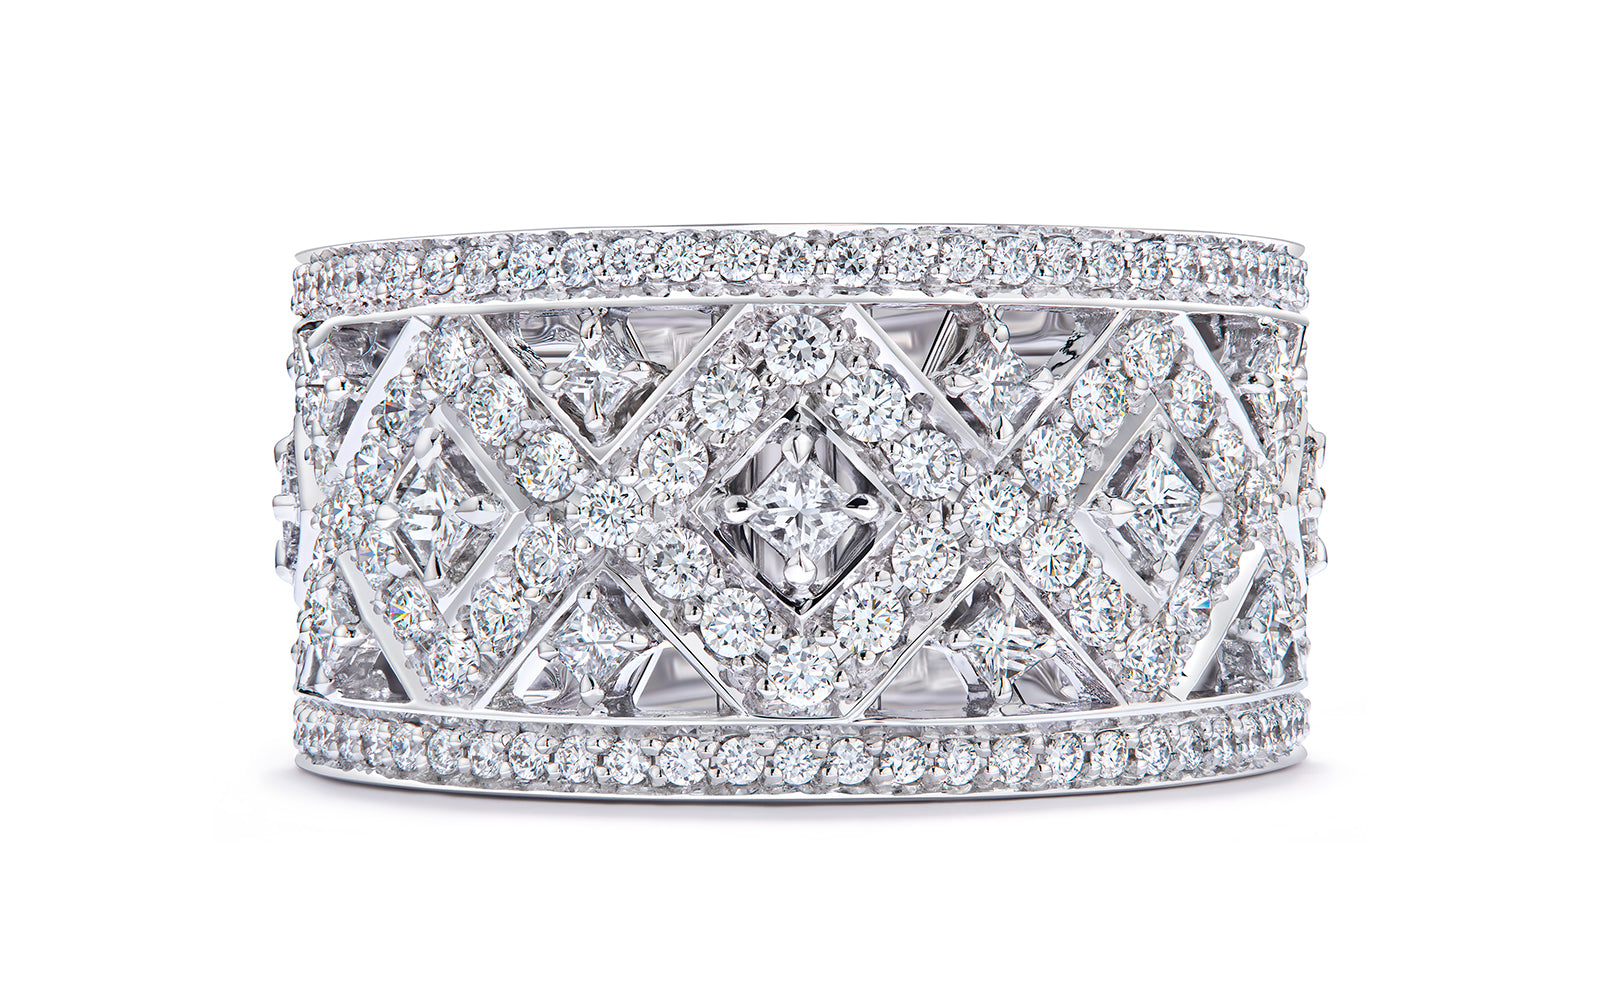 1.57ct D Flawless Diamond Ring set in 18K White Gold